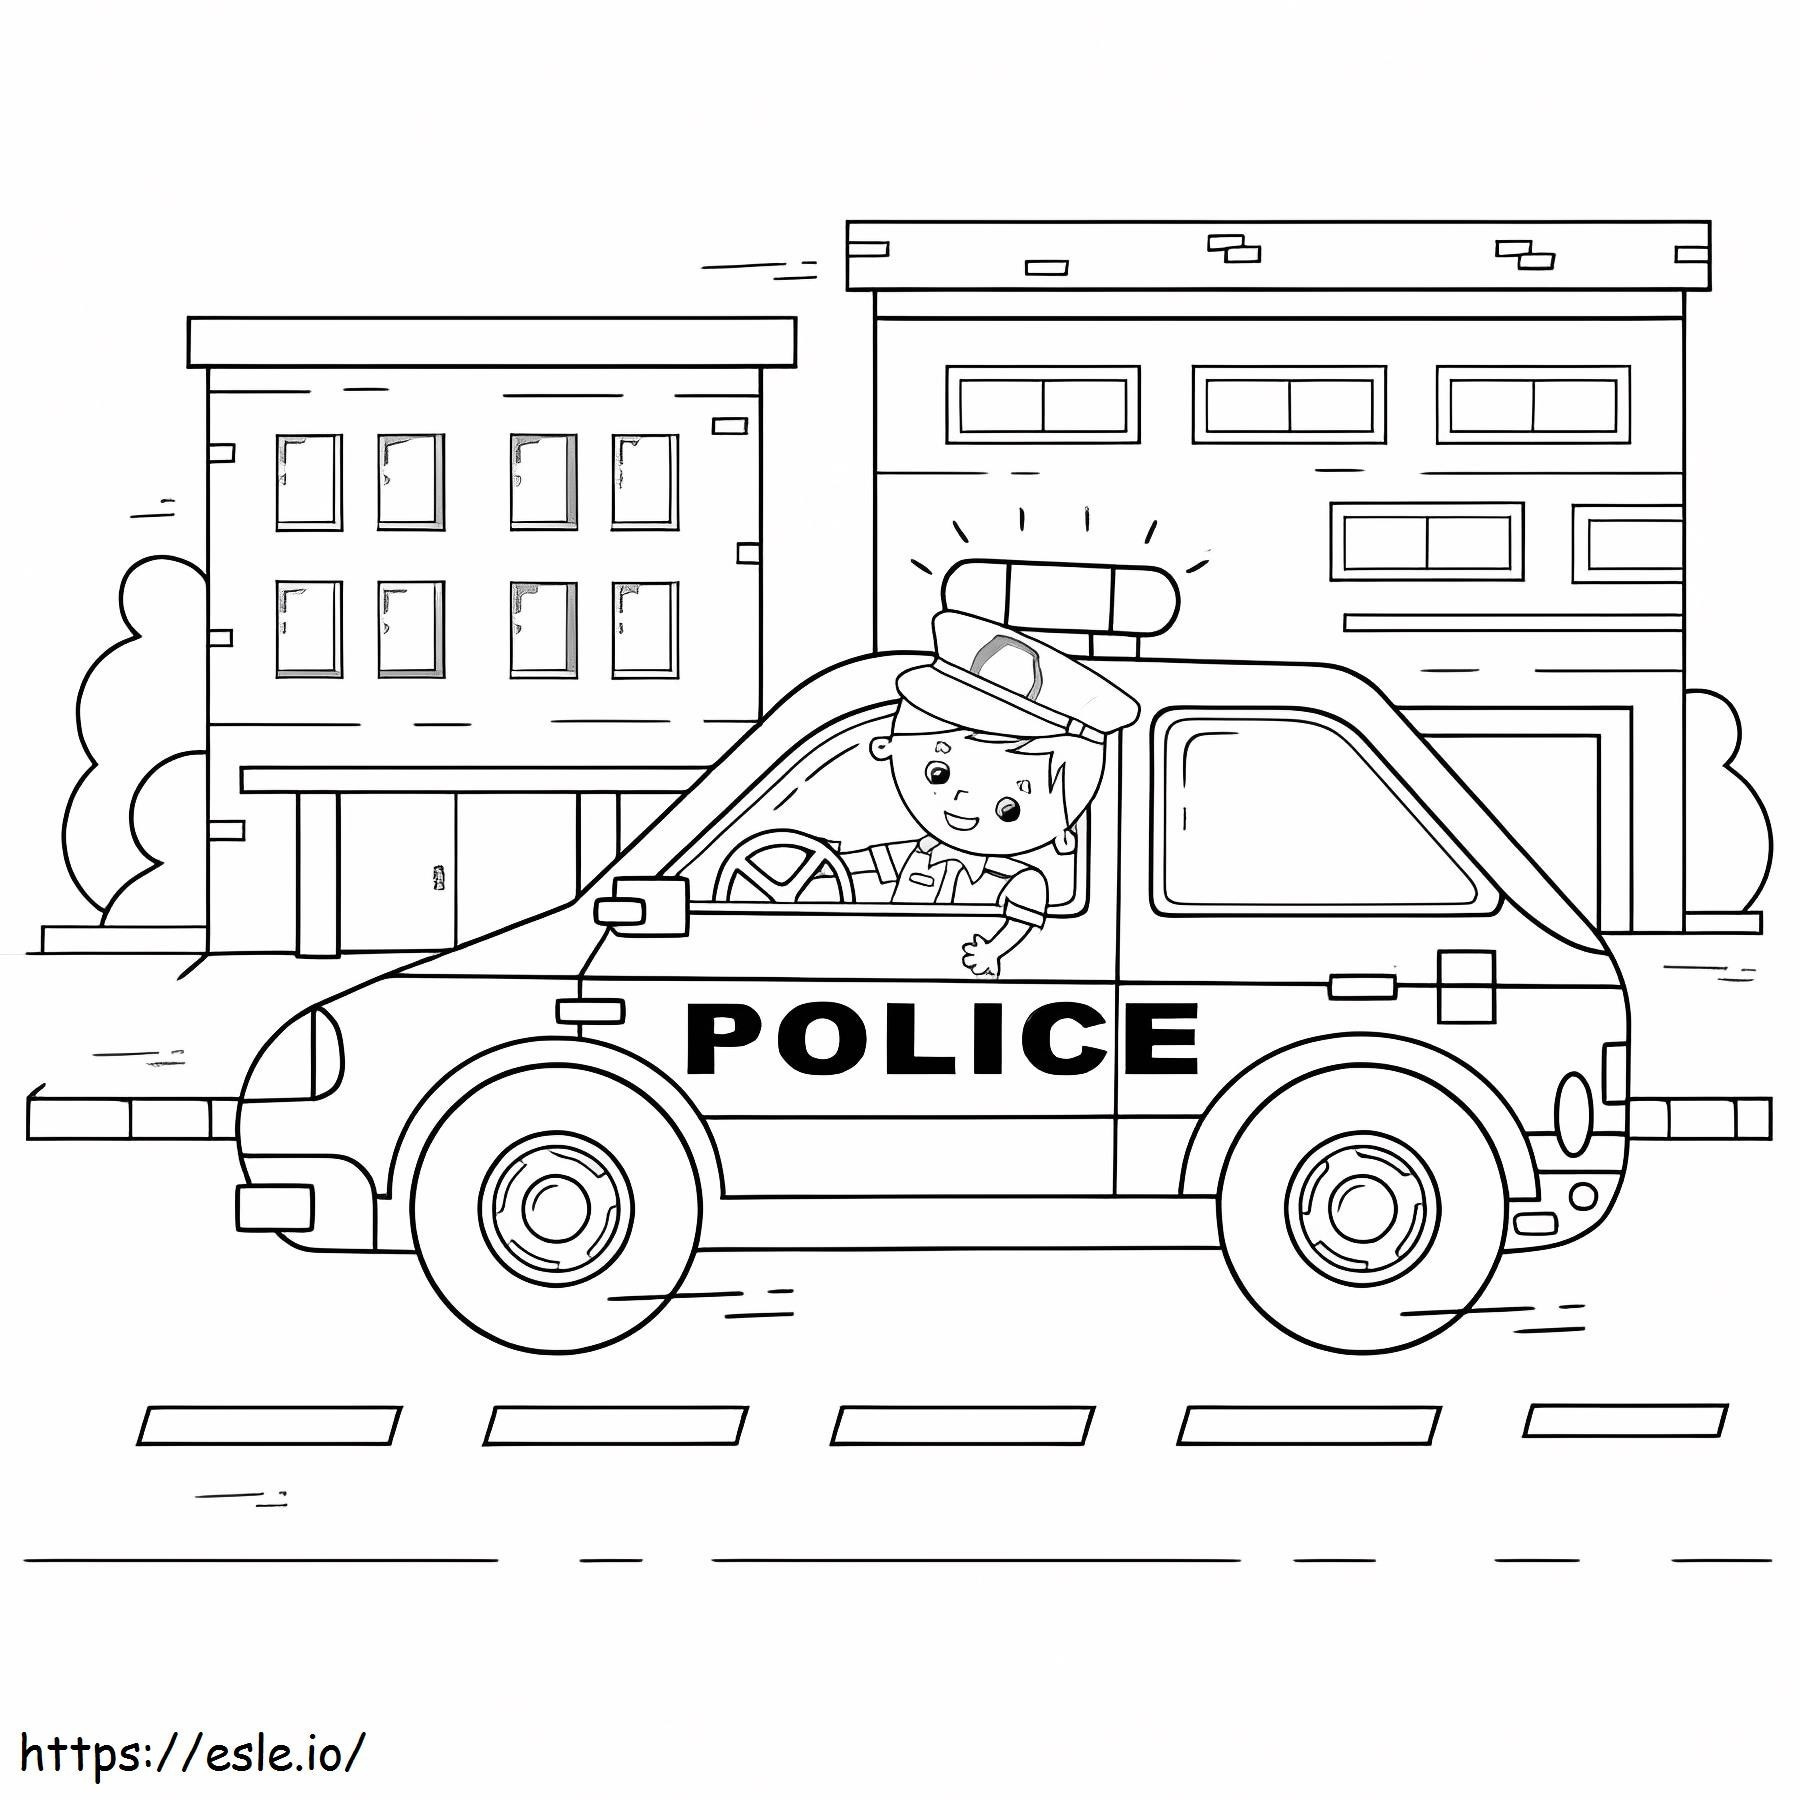 Polícia básica no carro para colorir